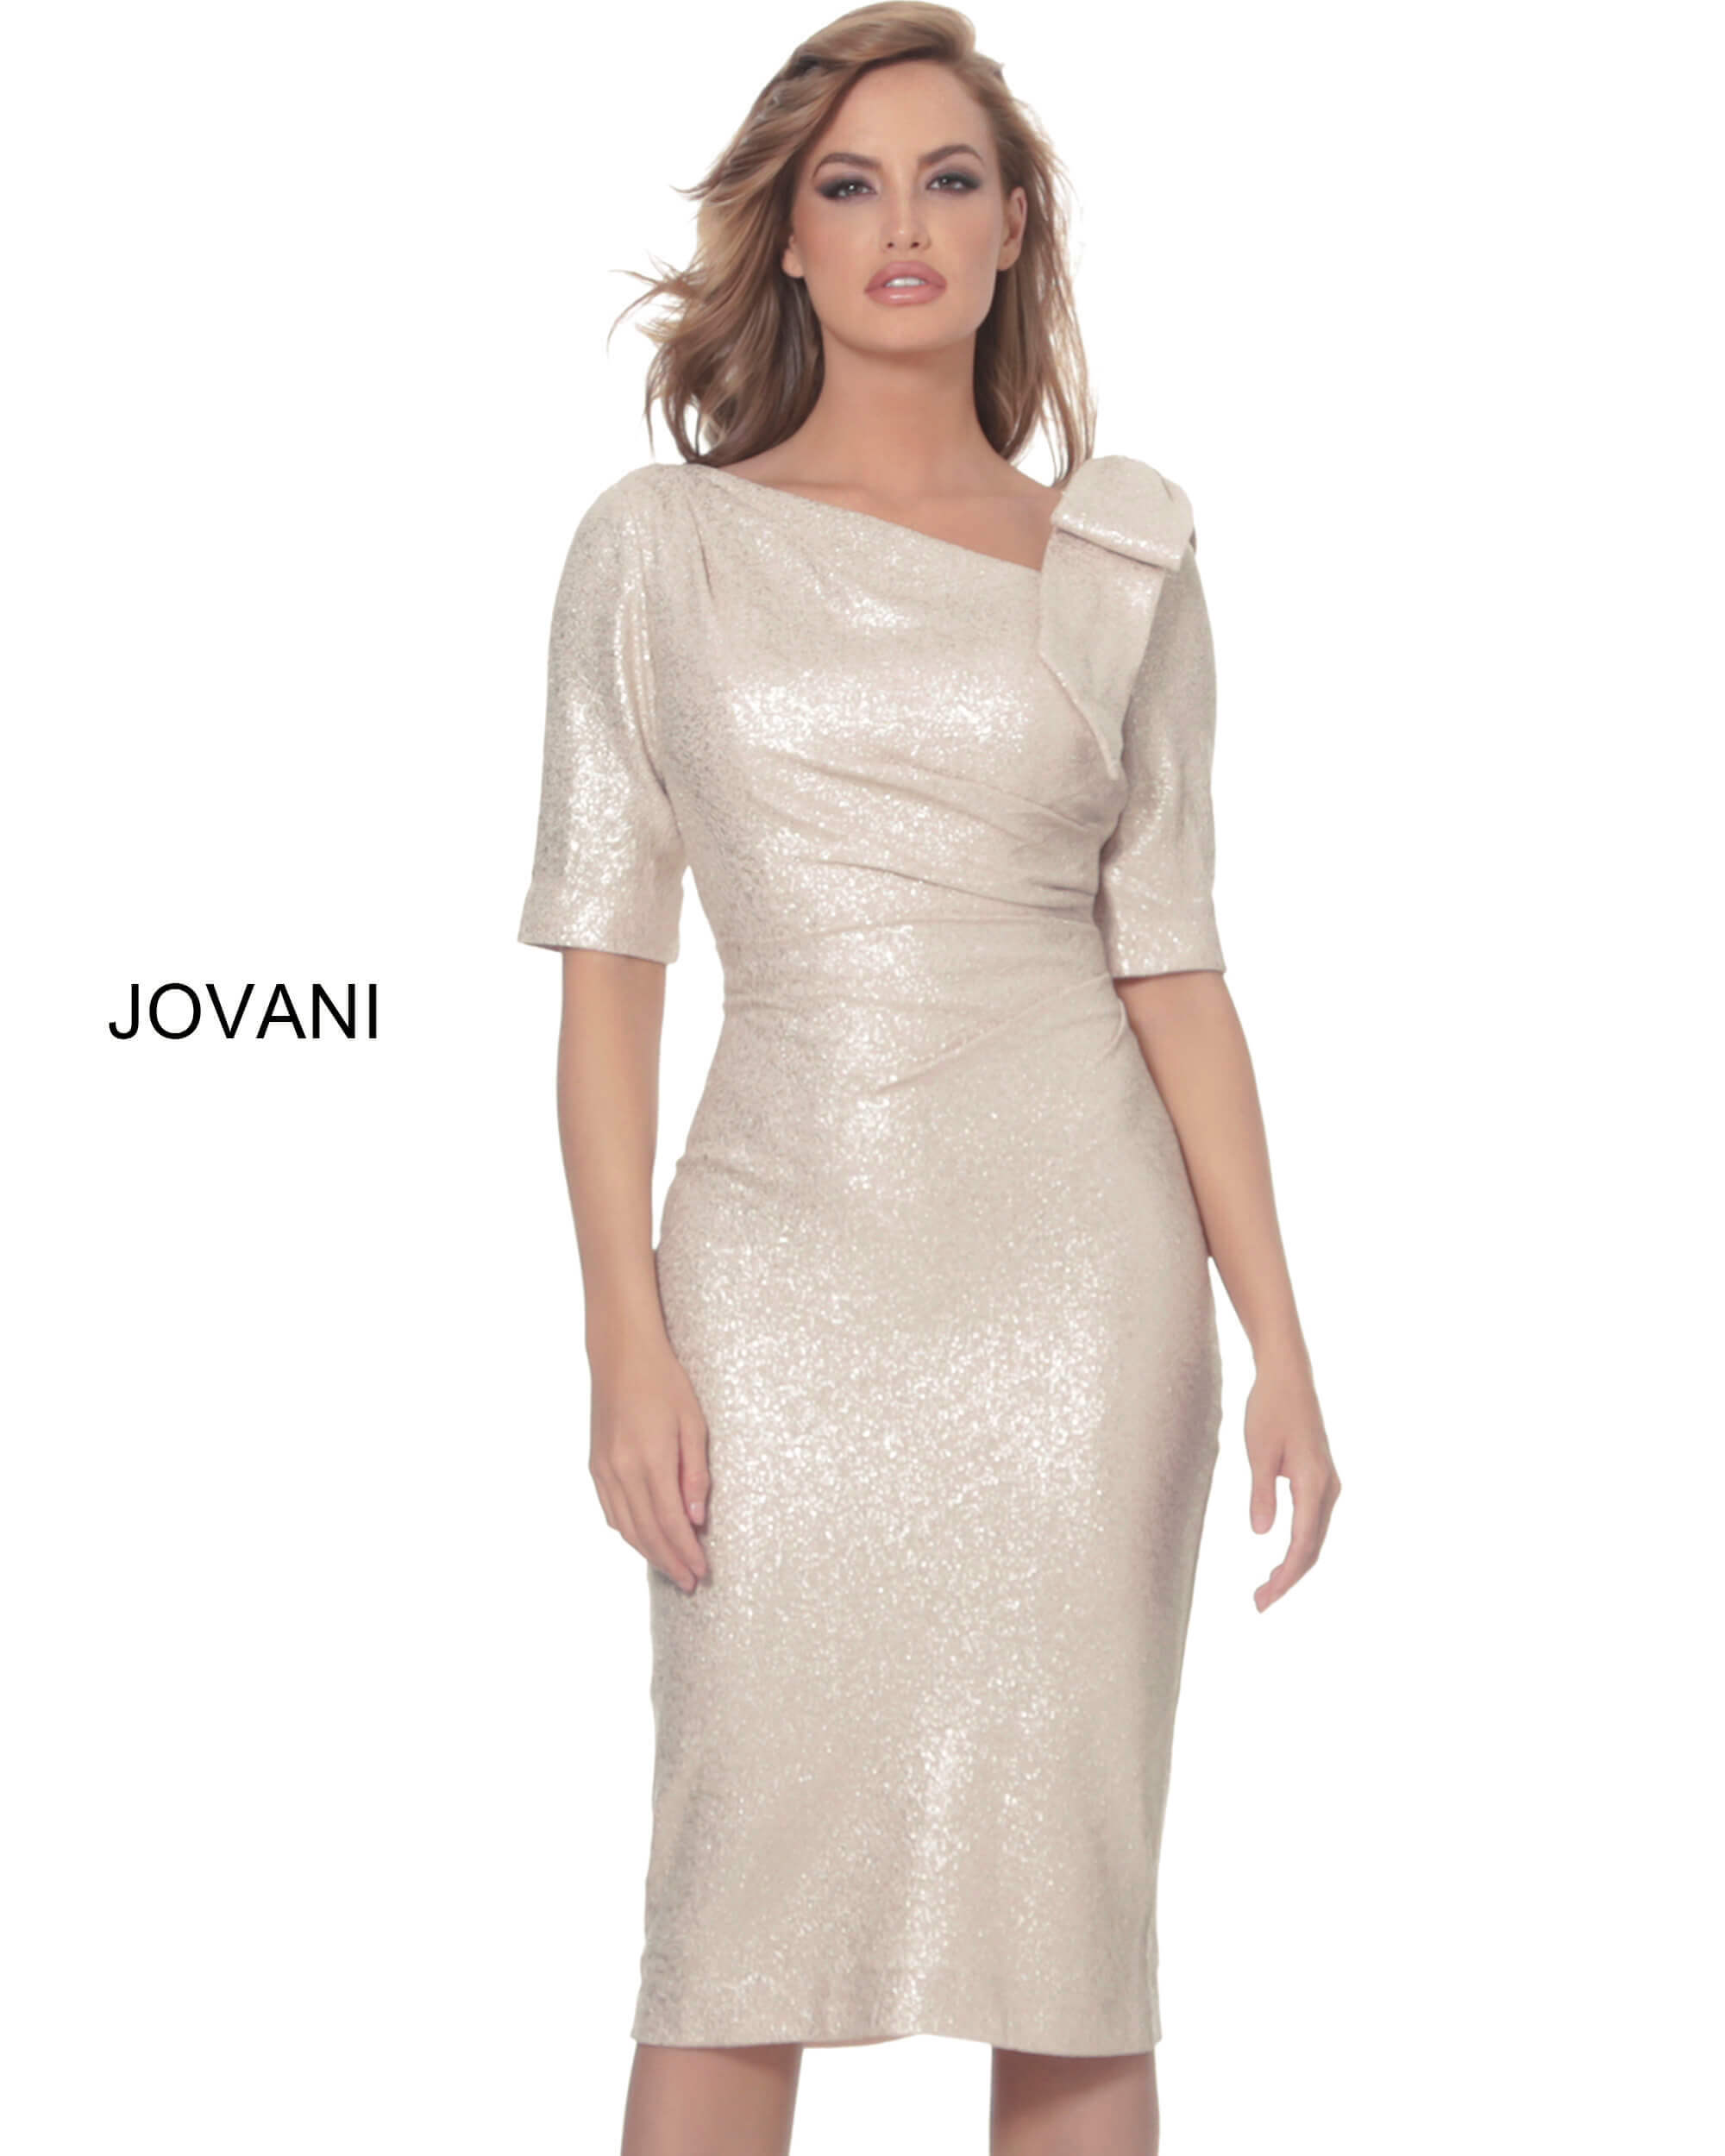 Jovani - Dress Style 03641